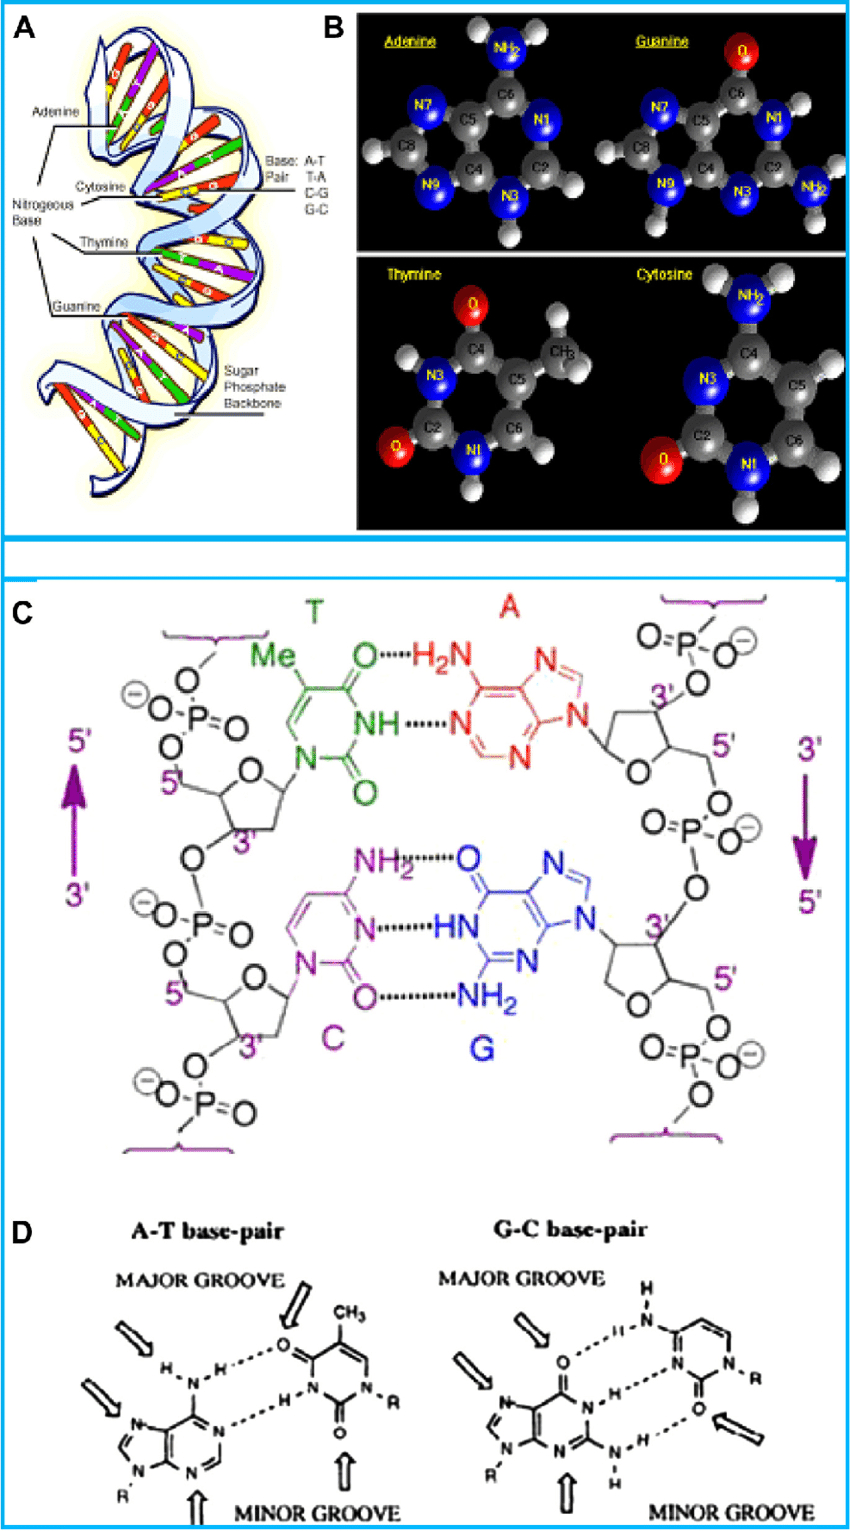 Dna Molecule Diagram A Structure Of Dna Molecule B Bases Adenine Guanine Thymine